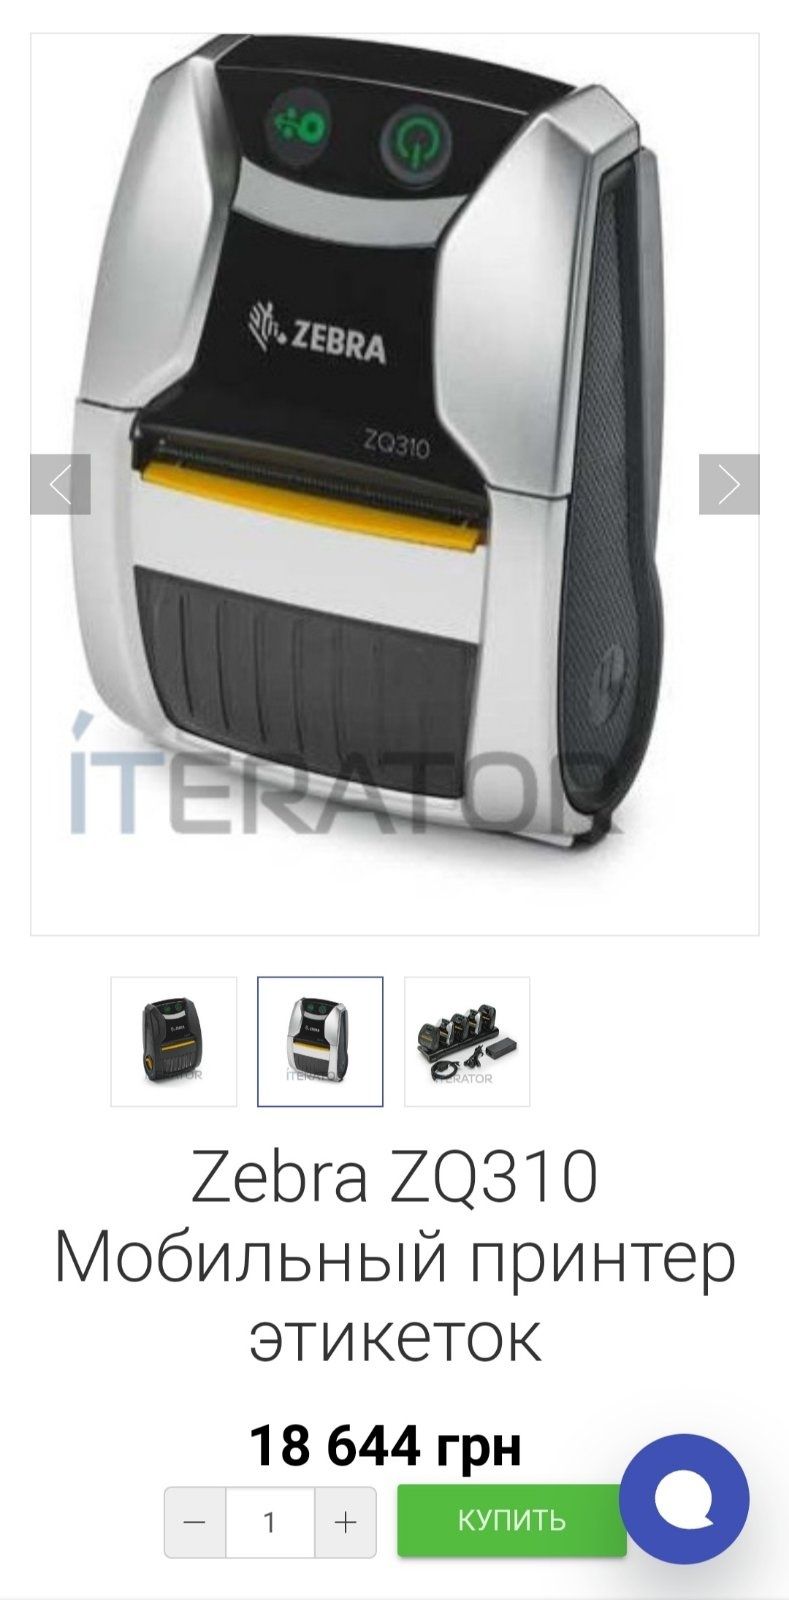 Zebra ZQ310 Моб.принтер, набор идёт без зарядного устройства.